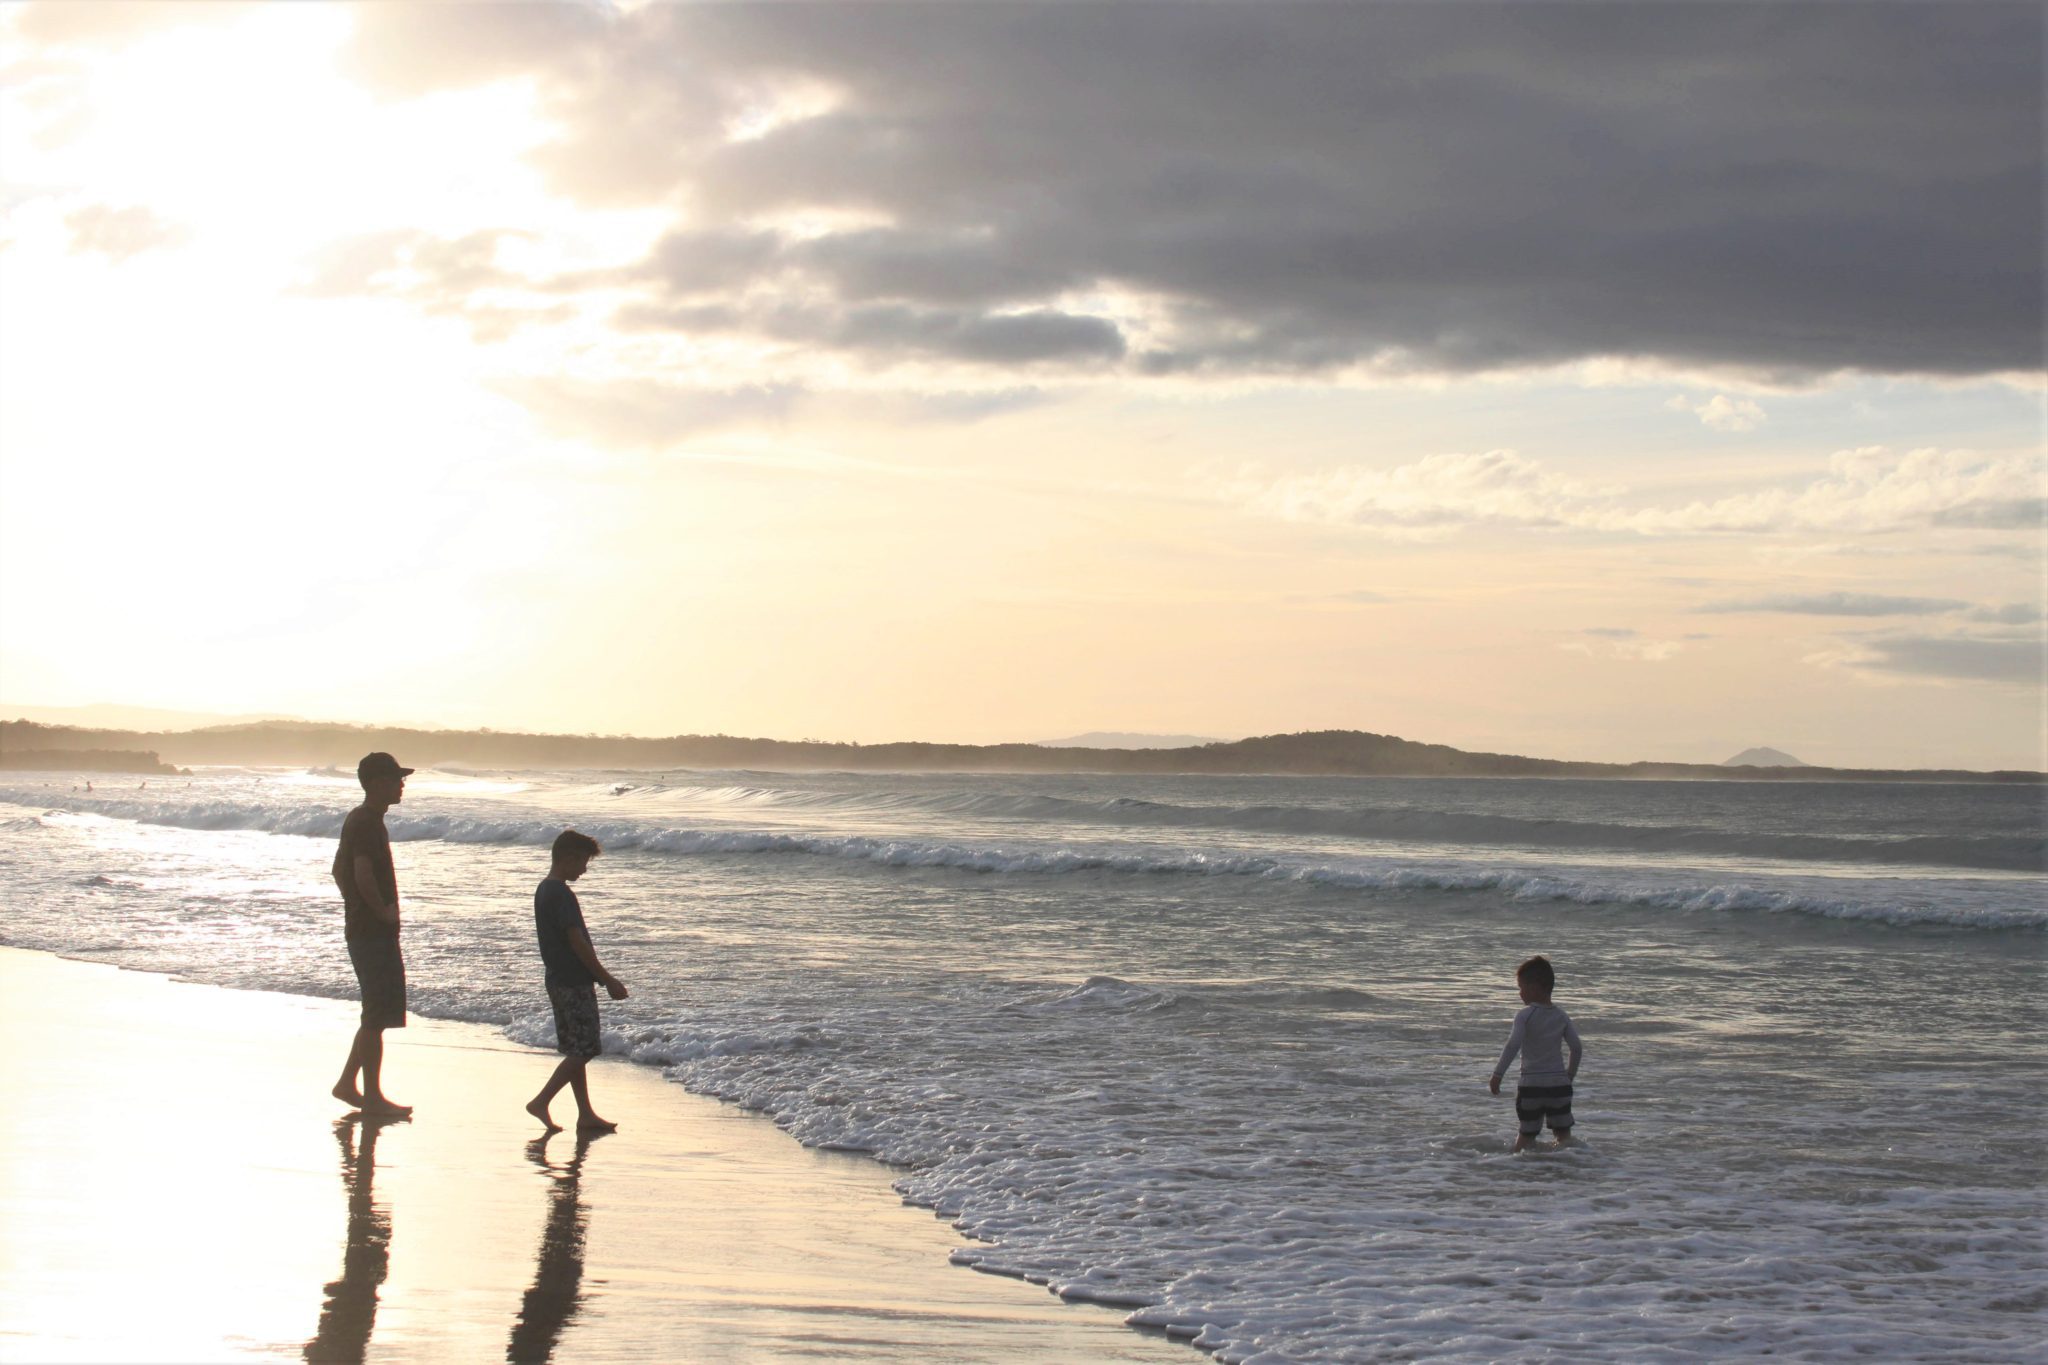 Noosa Heads is one of the most beautiful beaches along Australia's Sunshine Coast #australia #sunshinecoast #noosaheads #simplywander